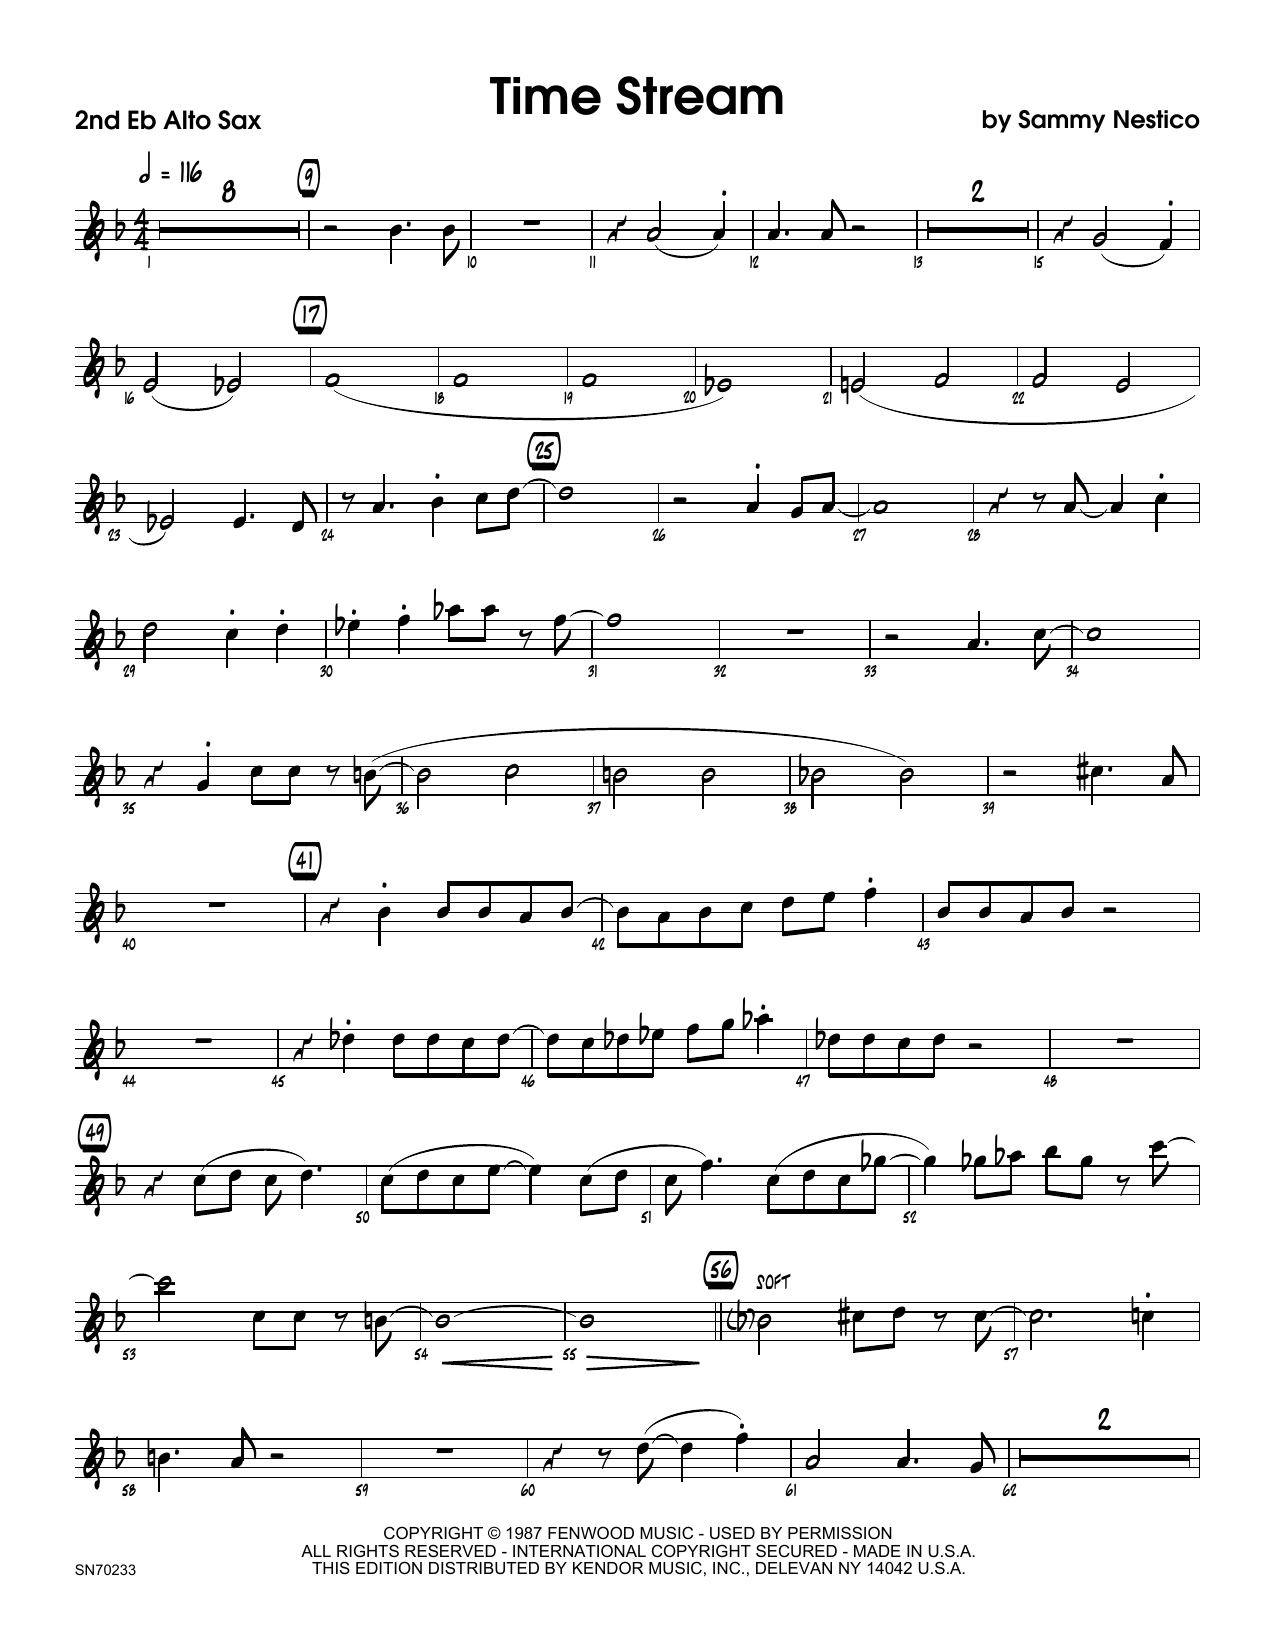 Download Sammy Nestico Time Stream - 2nd Eb Alto Saxophone Sheet Music